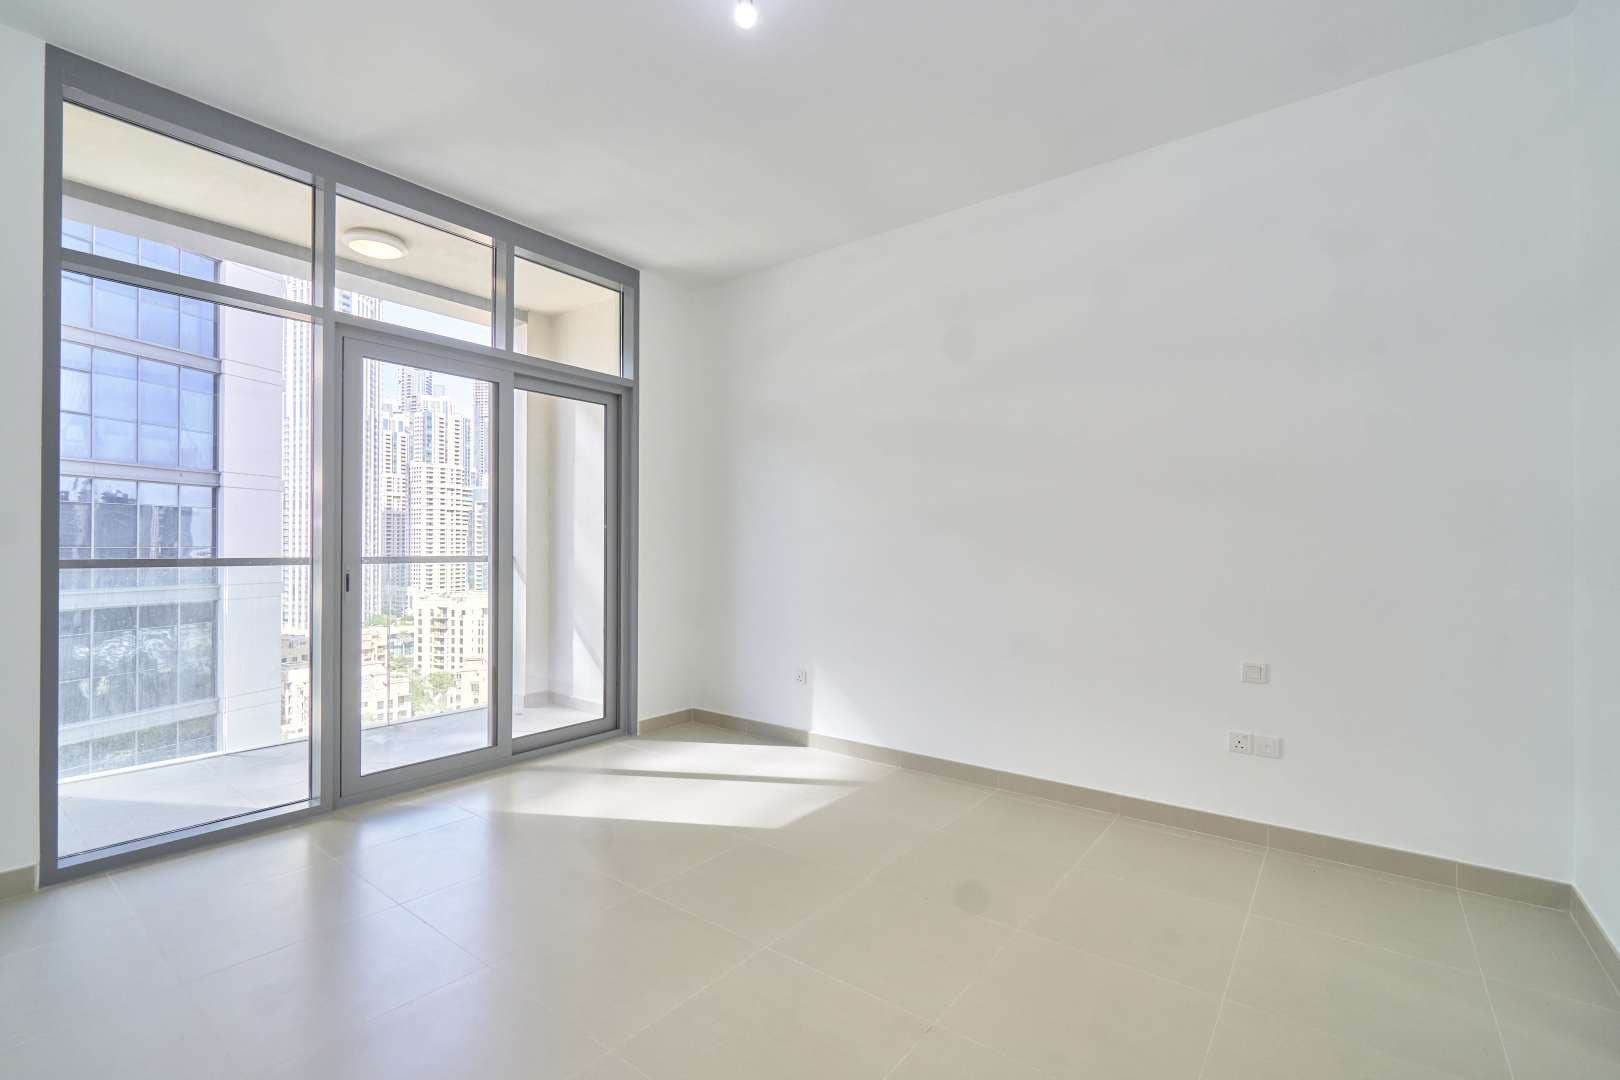 1 Bedroom Apartment For Rent Bellevue Towers Lp10078 264f99f7409cfc00.jpg